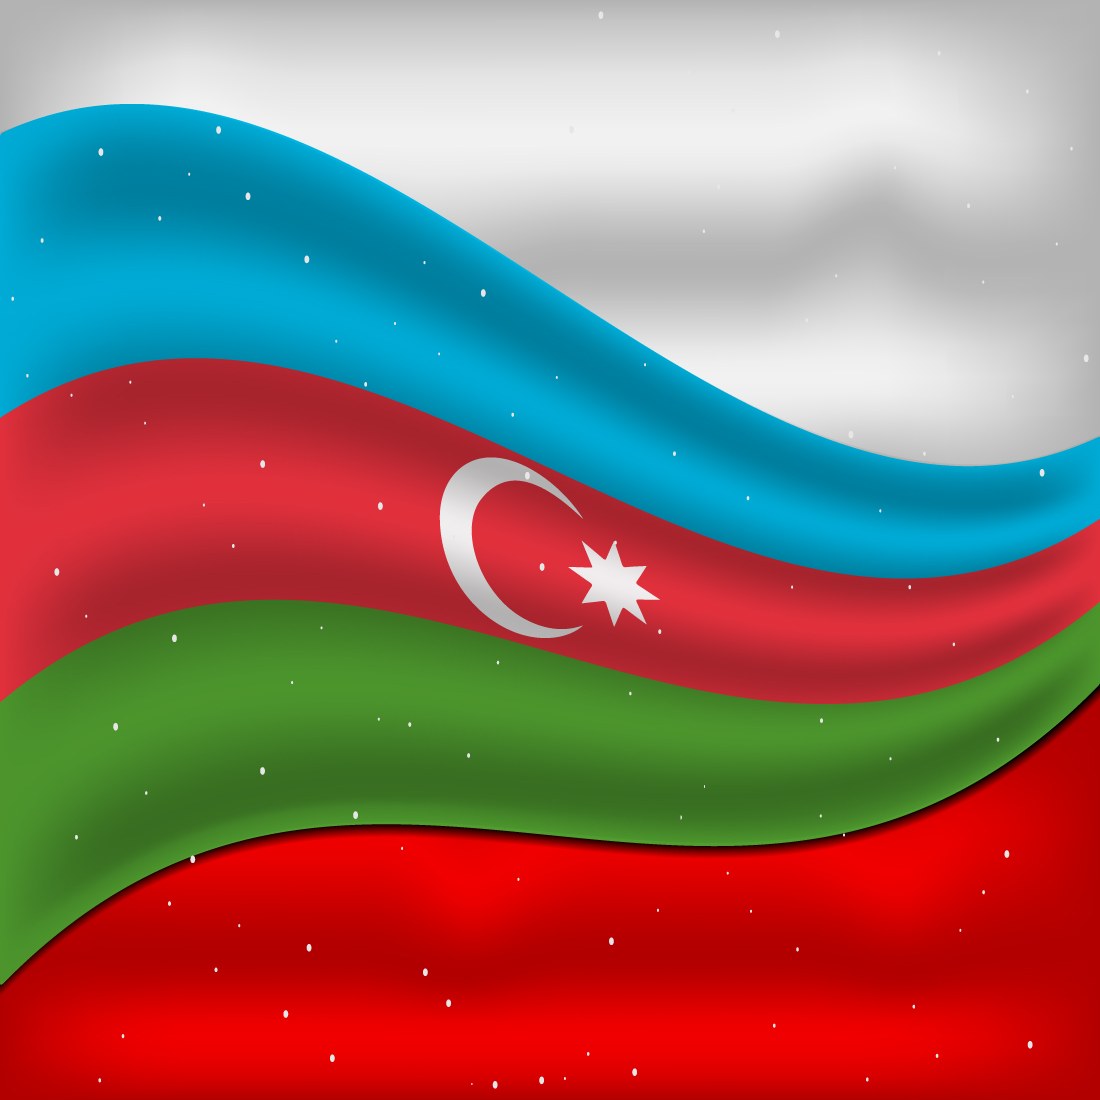 Exquisite image of Azerbaijan flag.